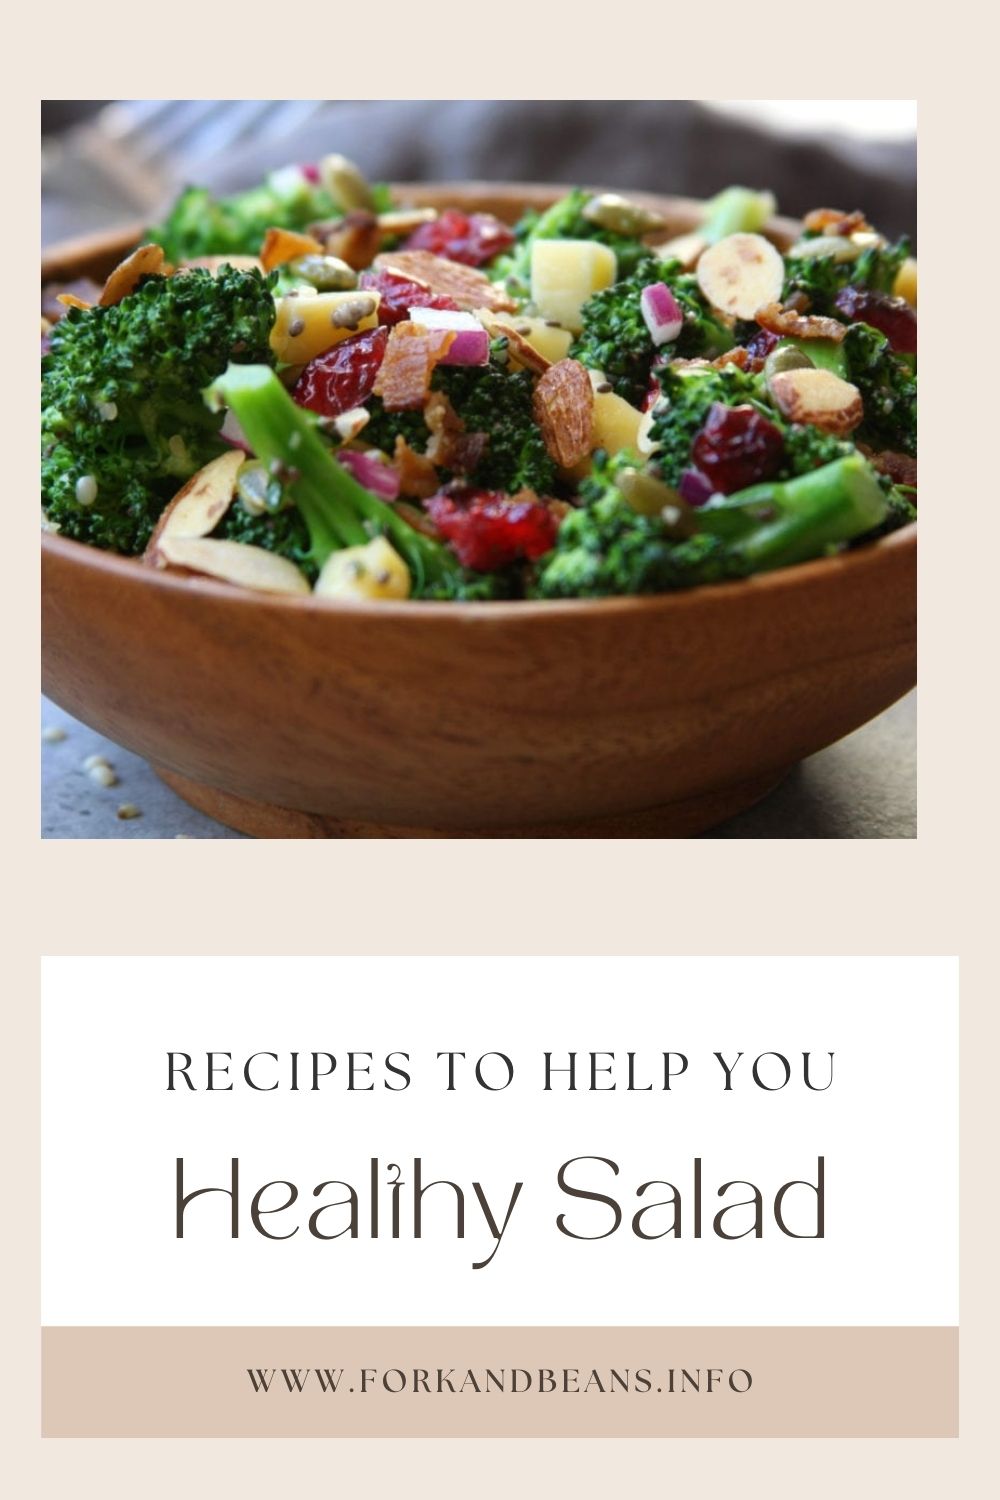 Broccoli Salad with a Healthy Twist